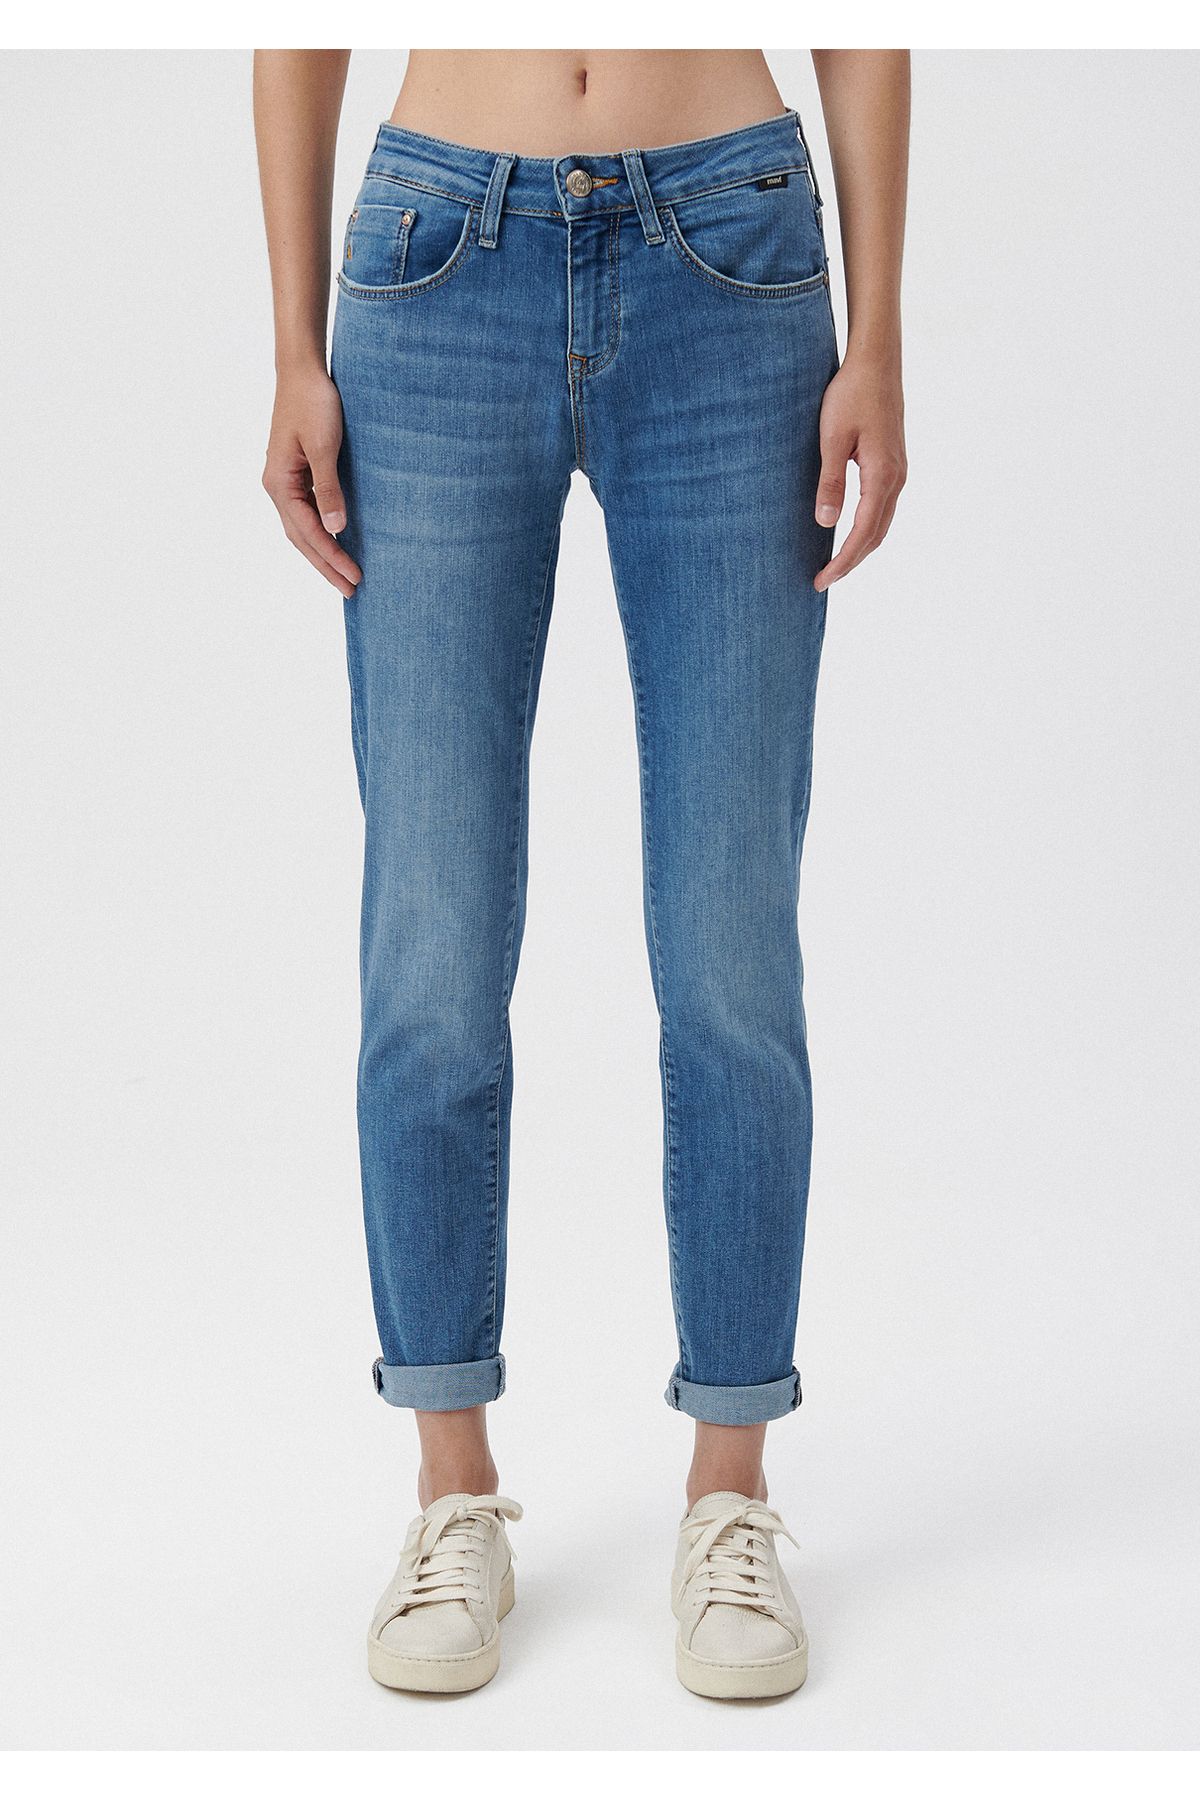 Mavi Ada Shaded Vintage Jean شلوار 1020534721